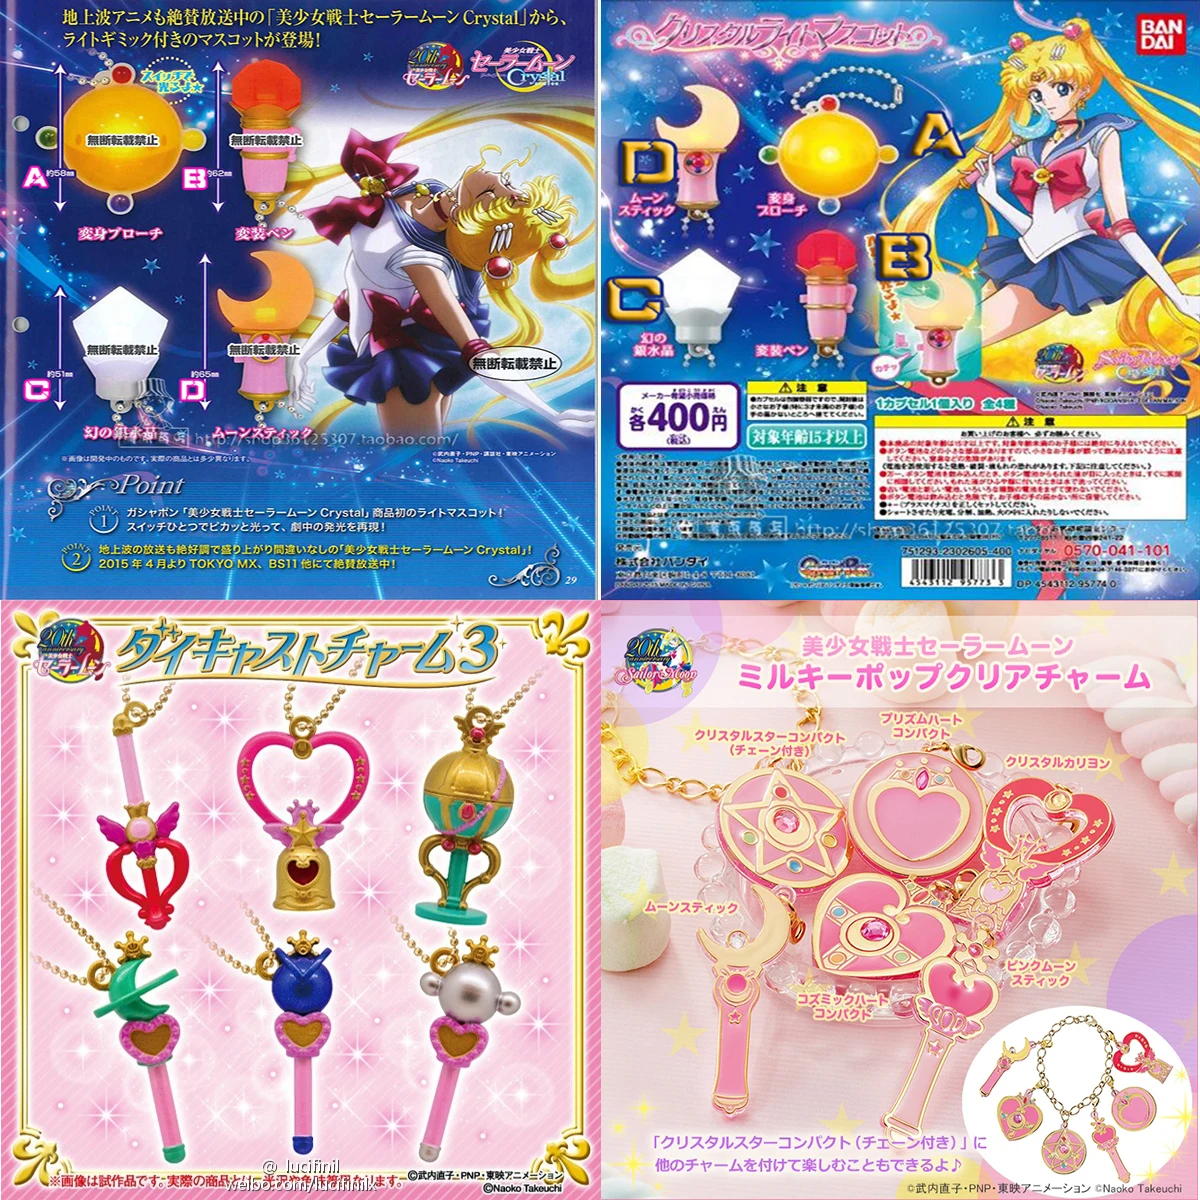 Bandai-figura de acción de Sailor Moon Gashapon, lámpara de cristal delicada, Transformer, colgante, juguetes, regalos para niñas